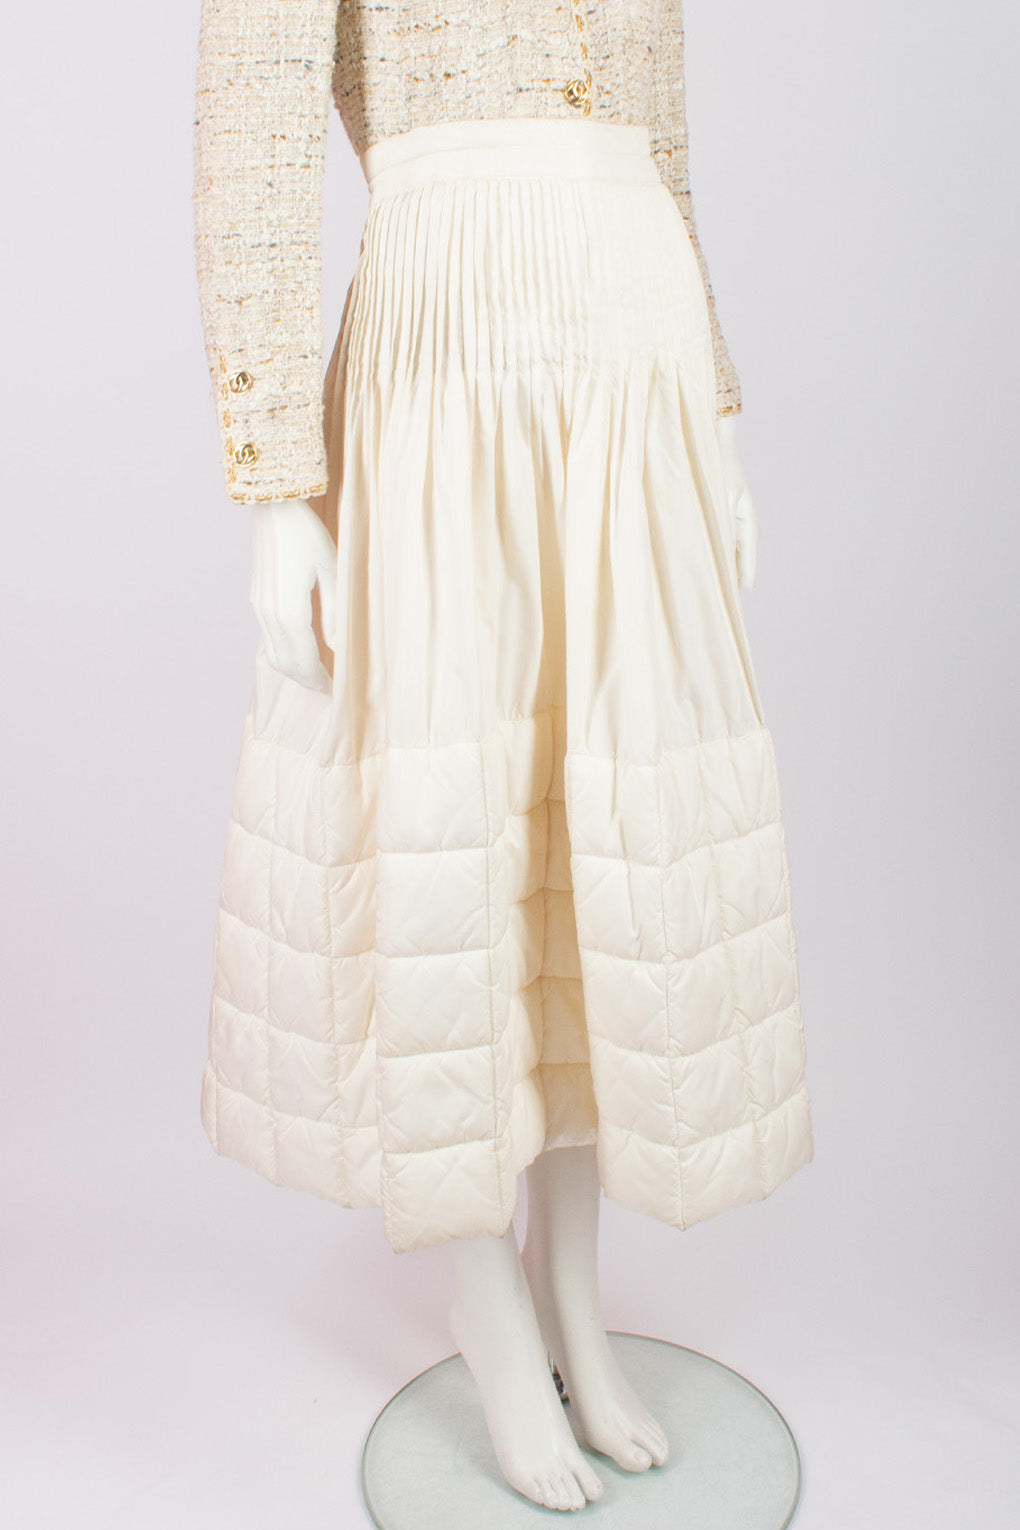 CHANEL AW2000 White Puffer Skirt